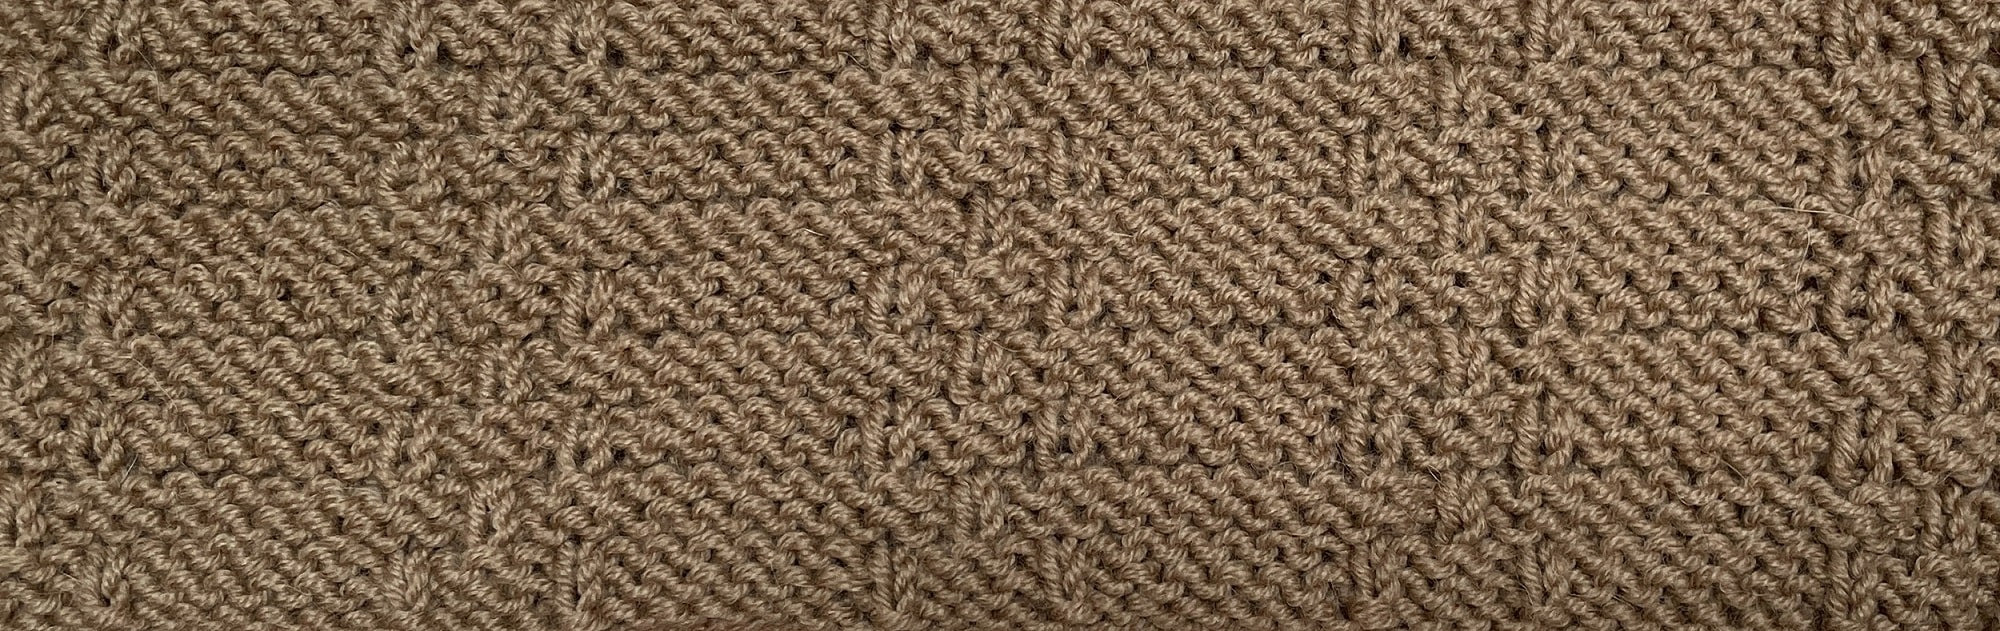 Crochet Preemie Hat – Lion Brand Yarn